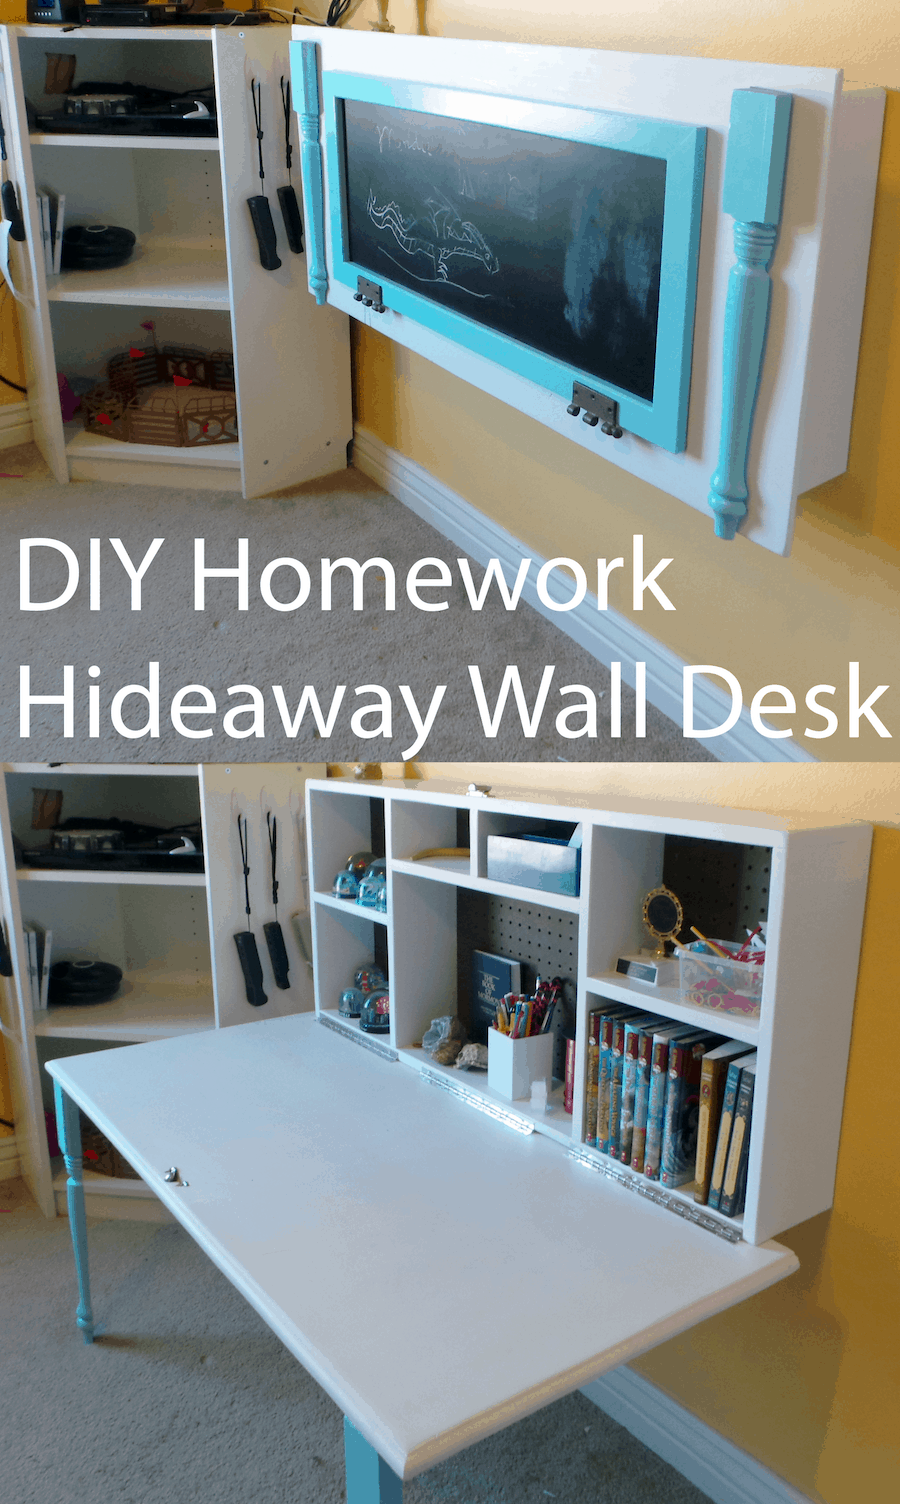 Homework hideaway wall desk